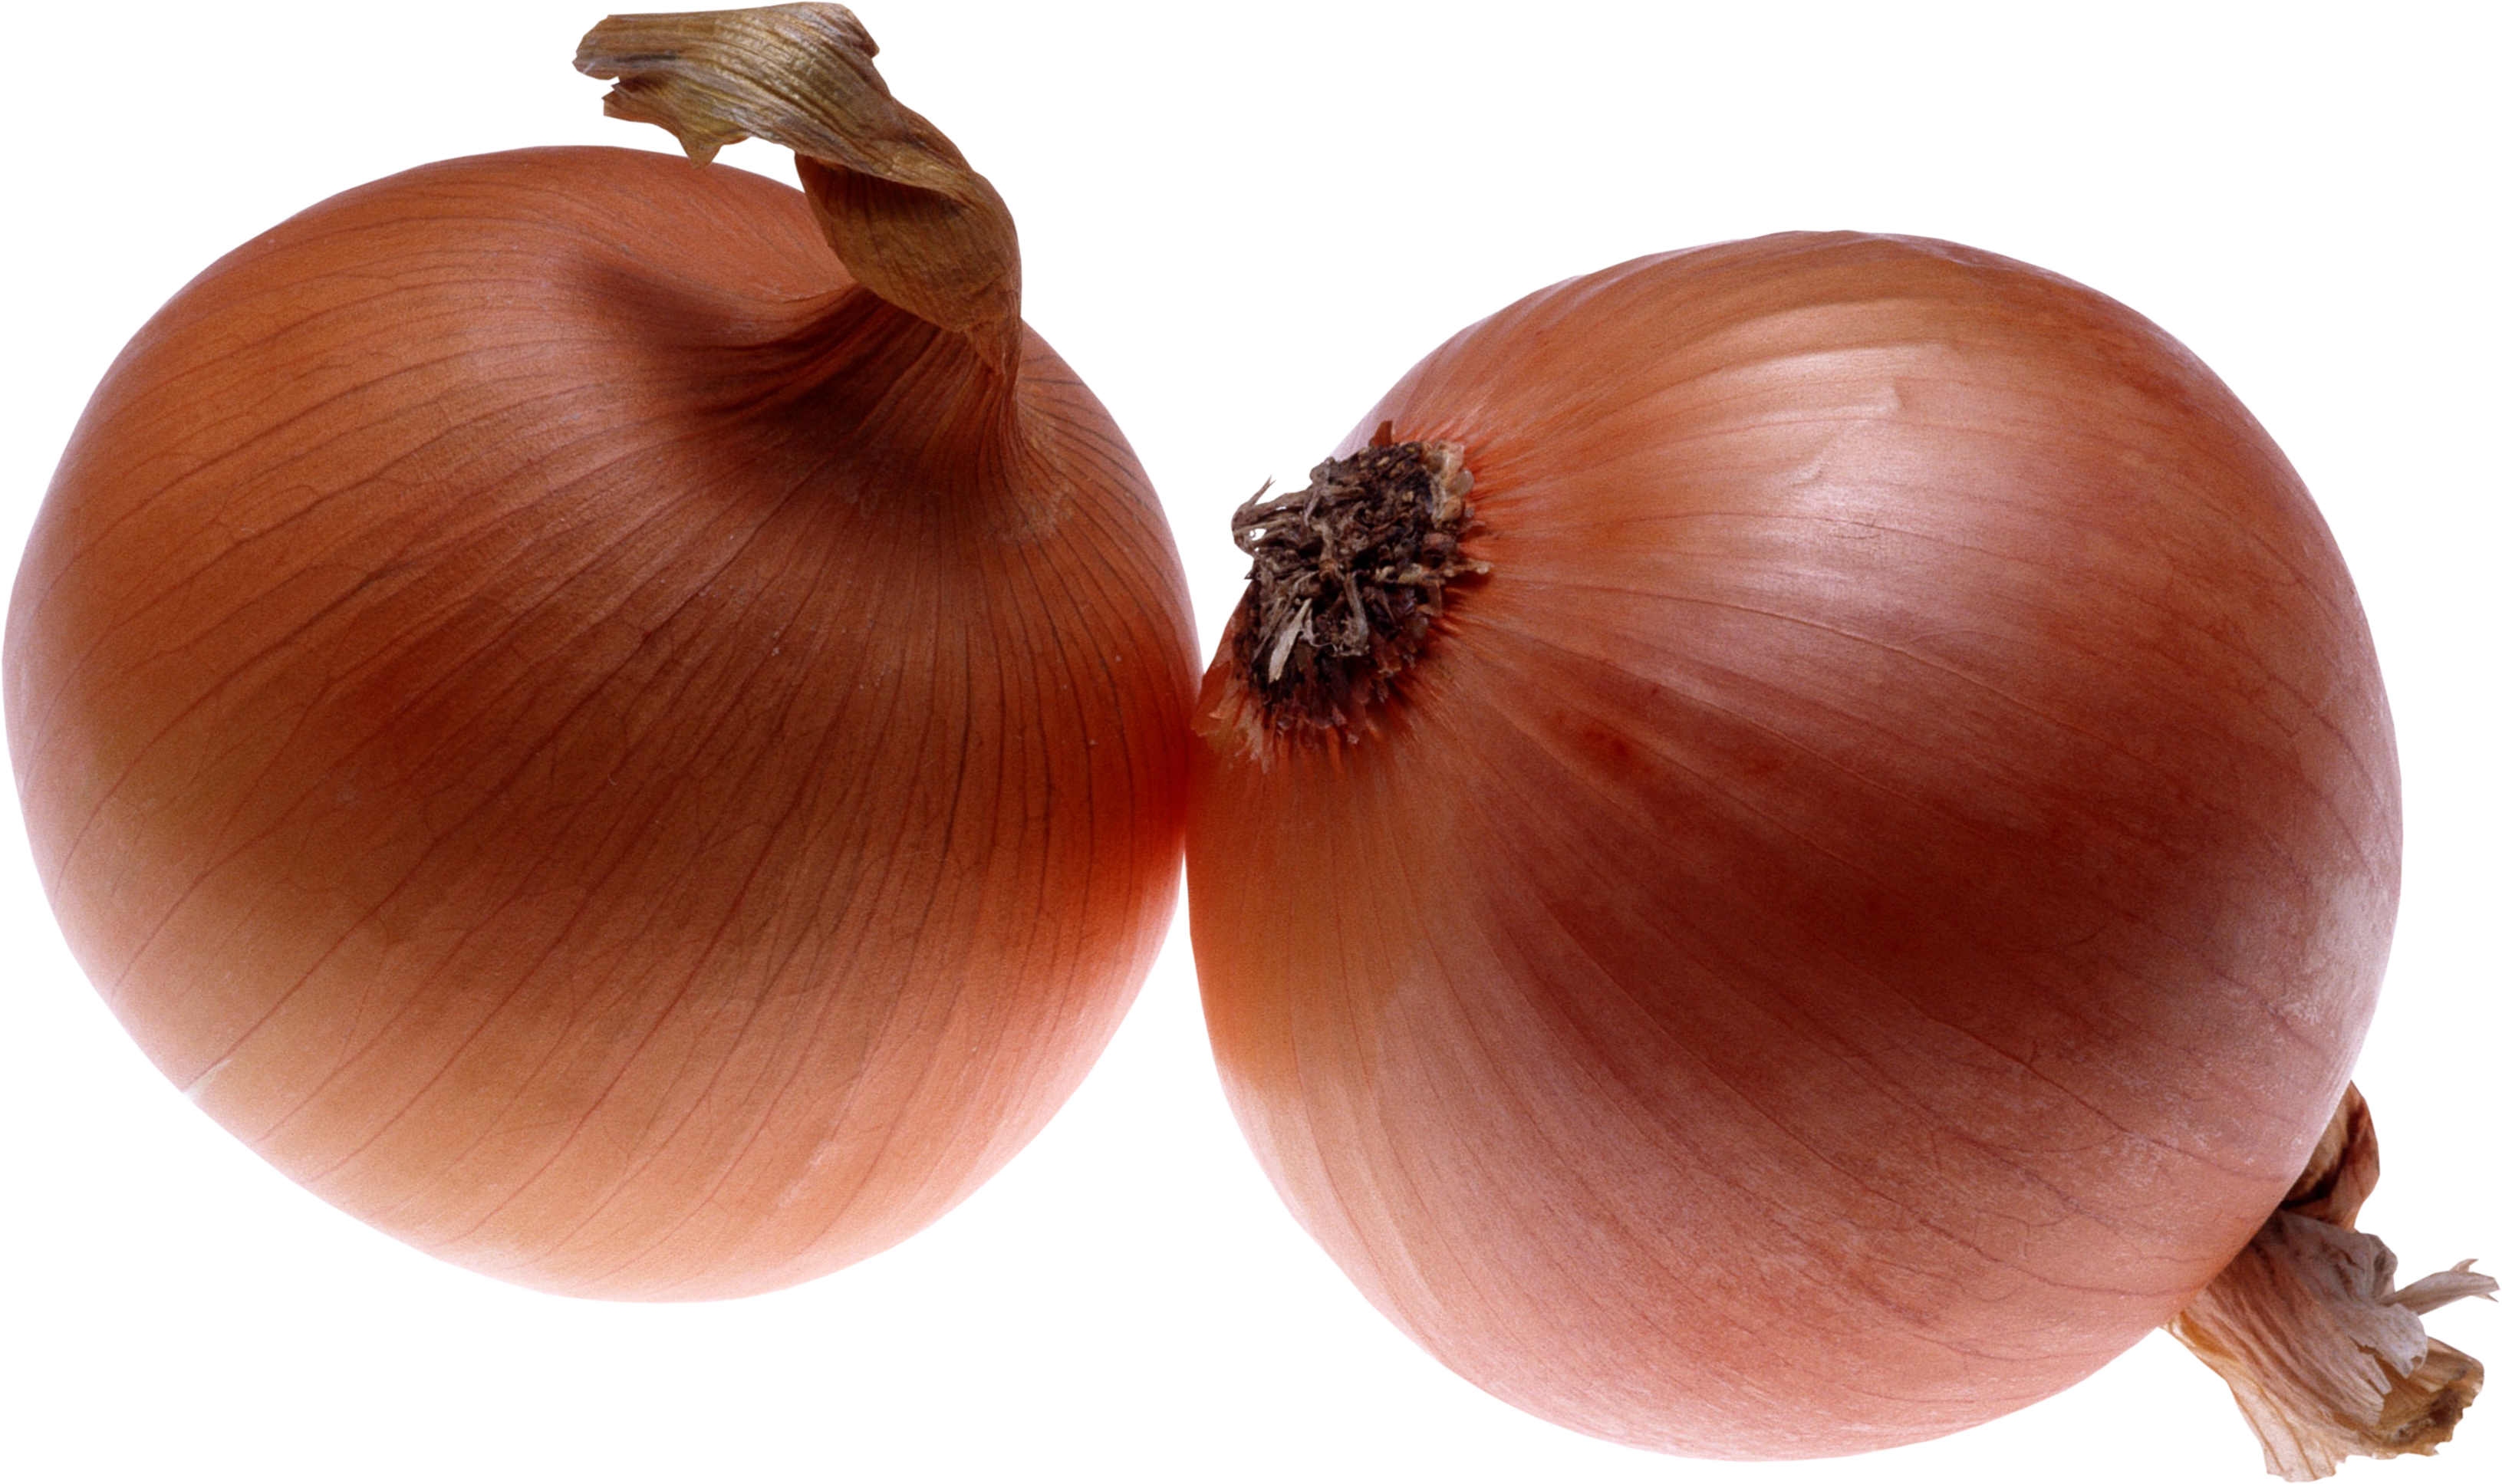 Onion HD PNG - 117514